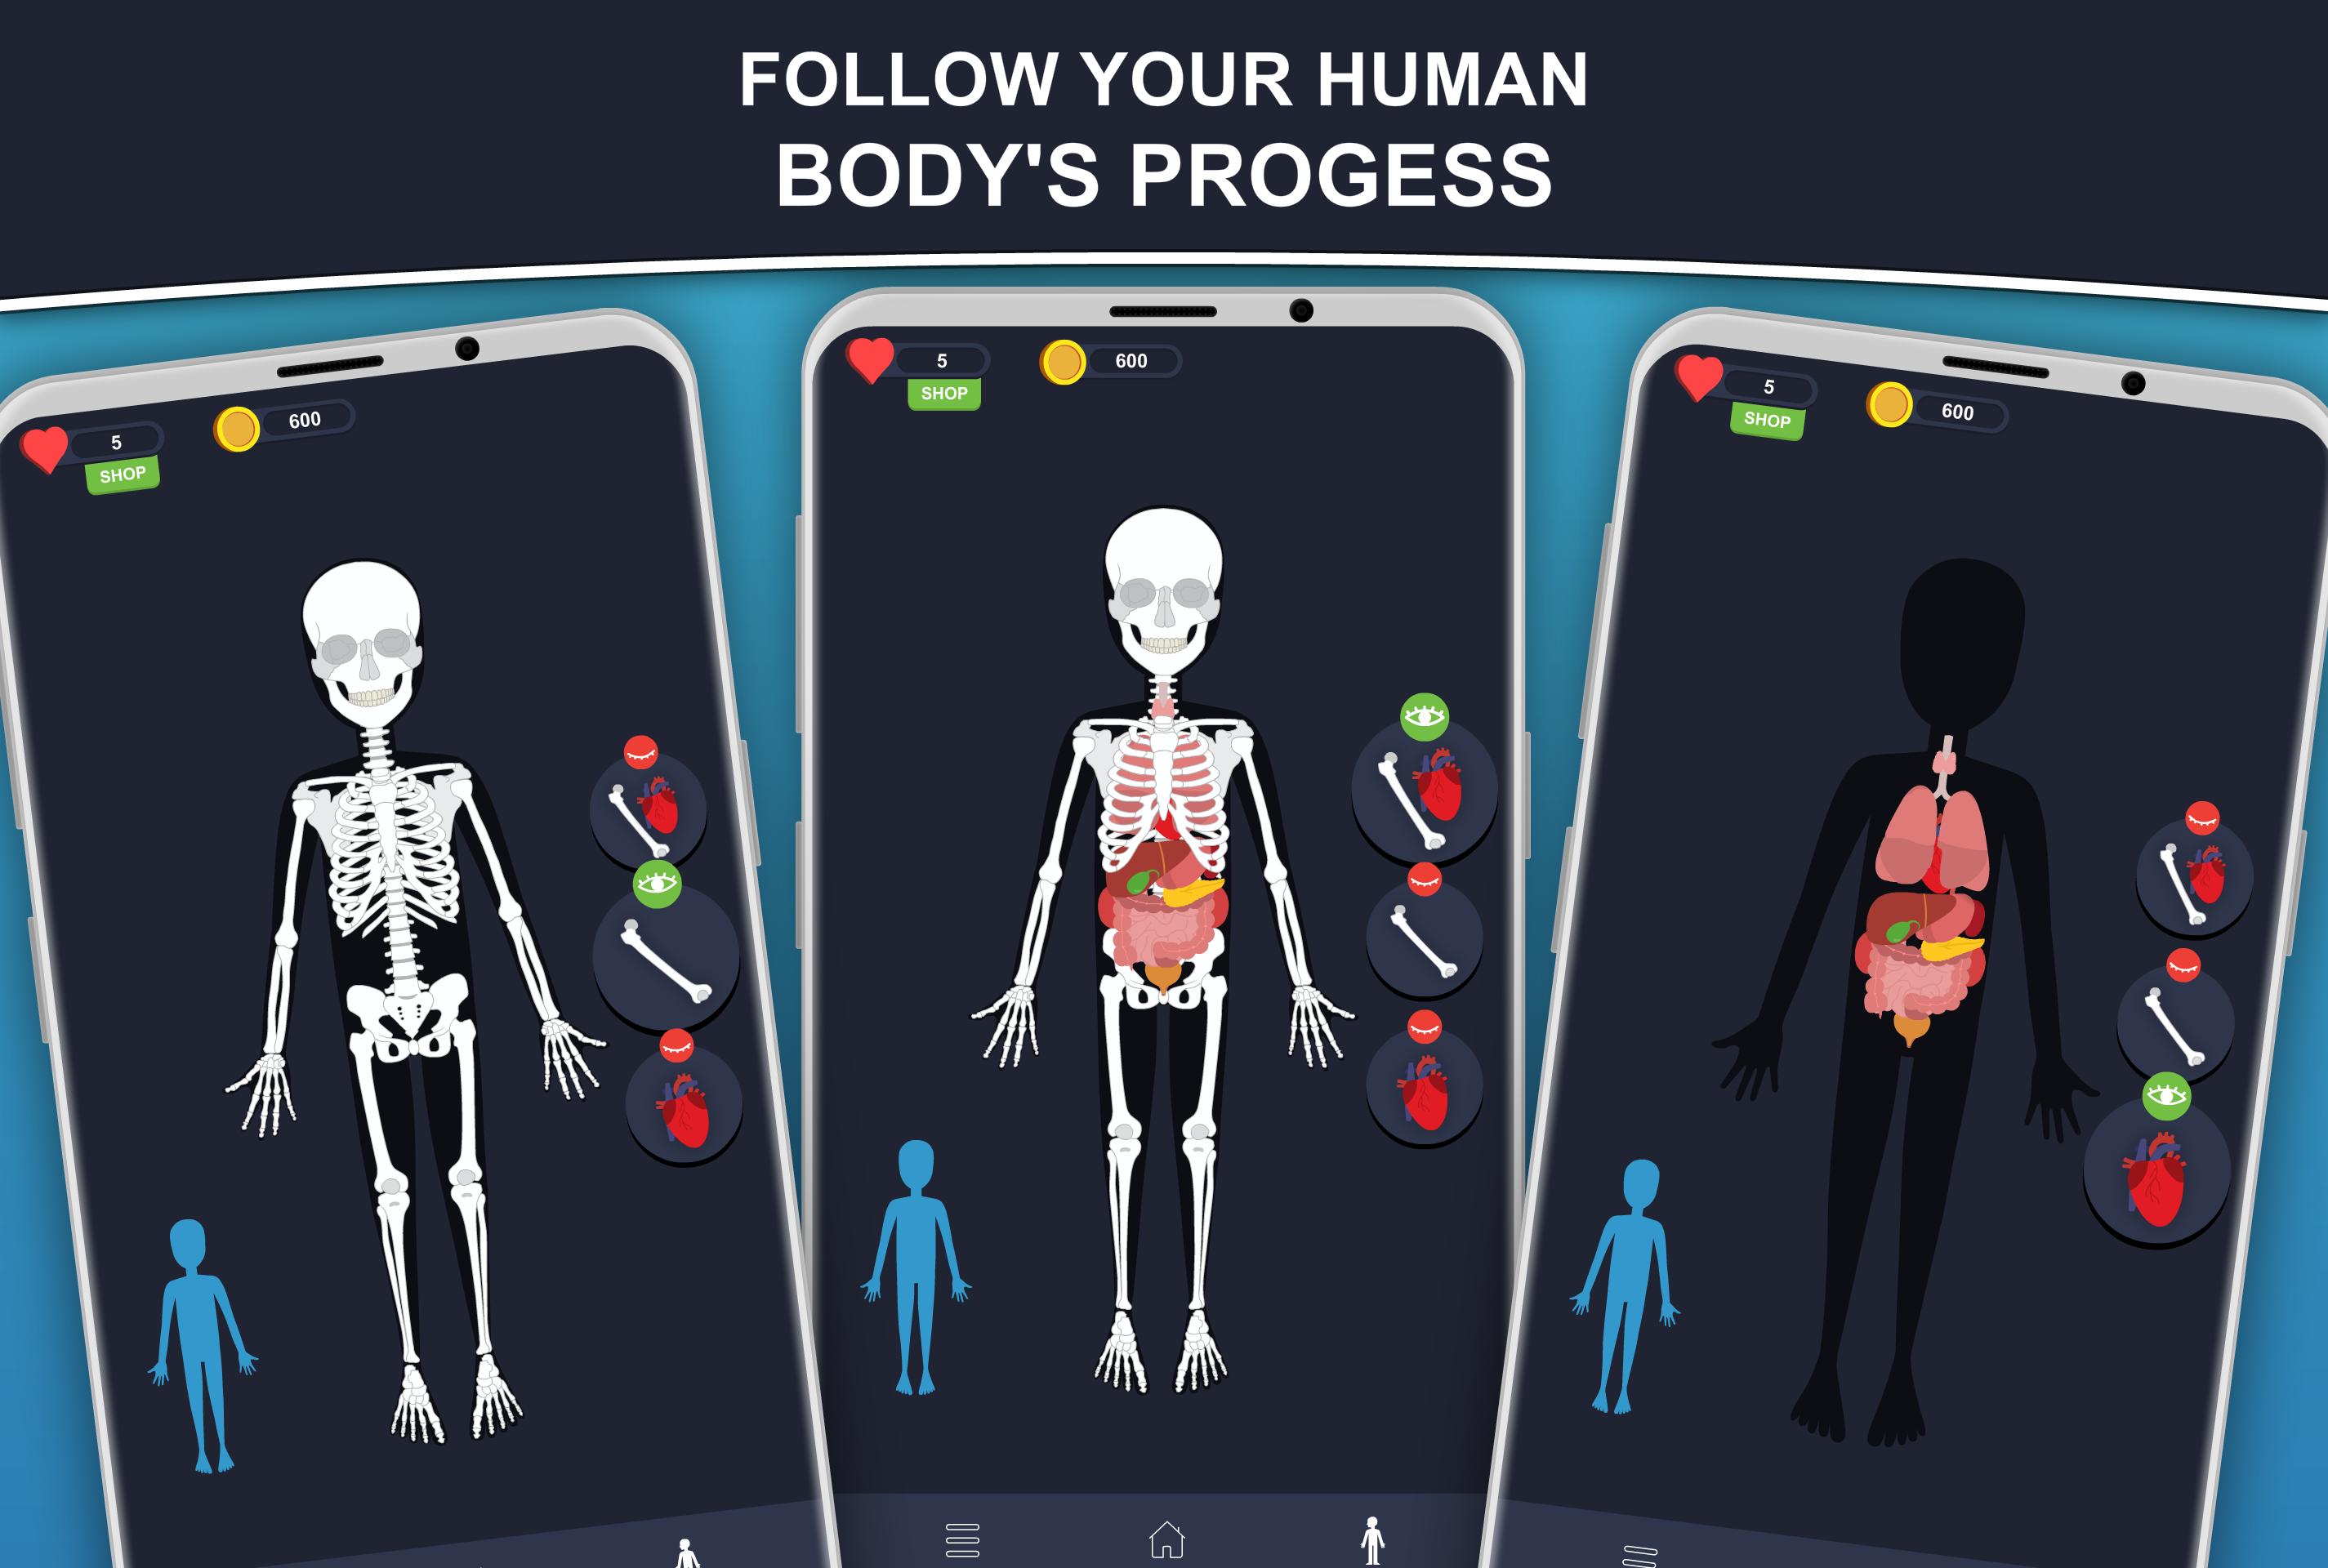 Anato Trivia Quiz on Human Anatomy 3.1.0 Screenshot 2